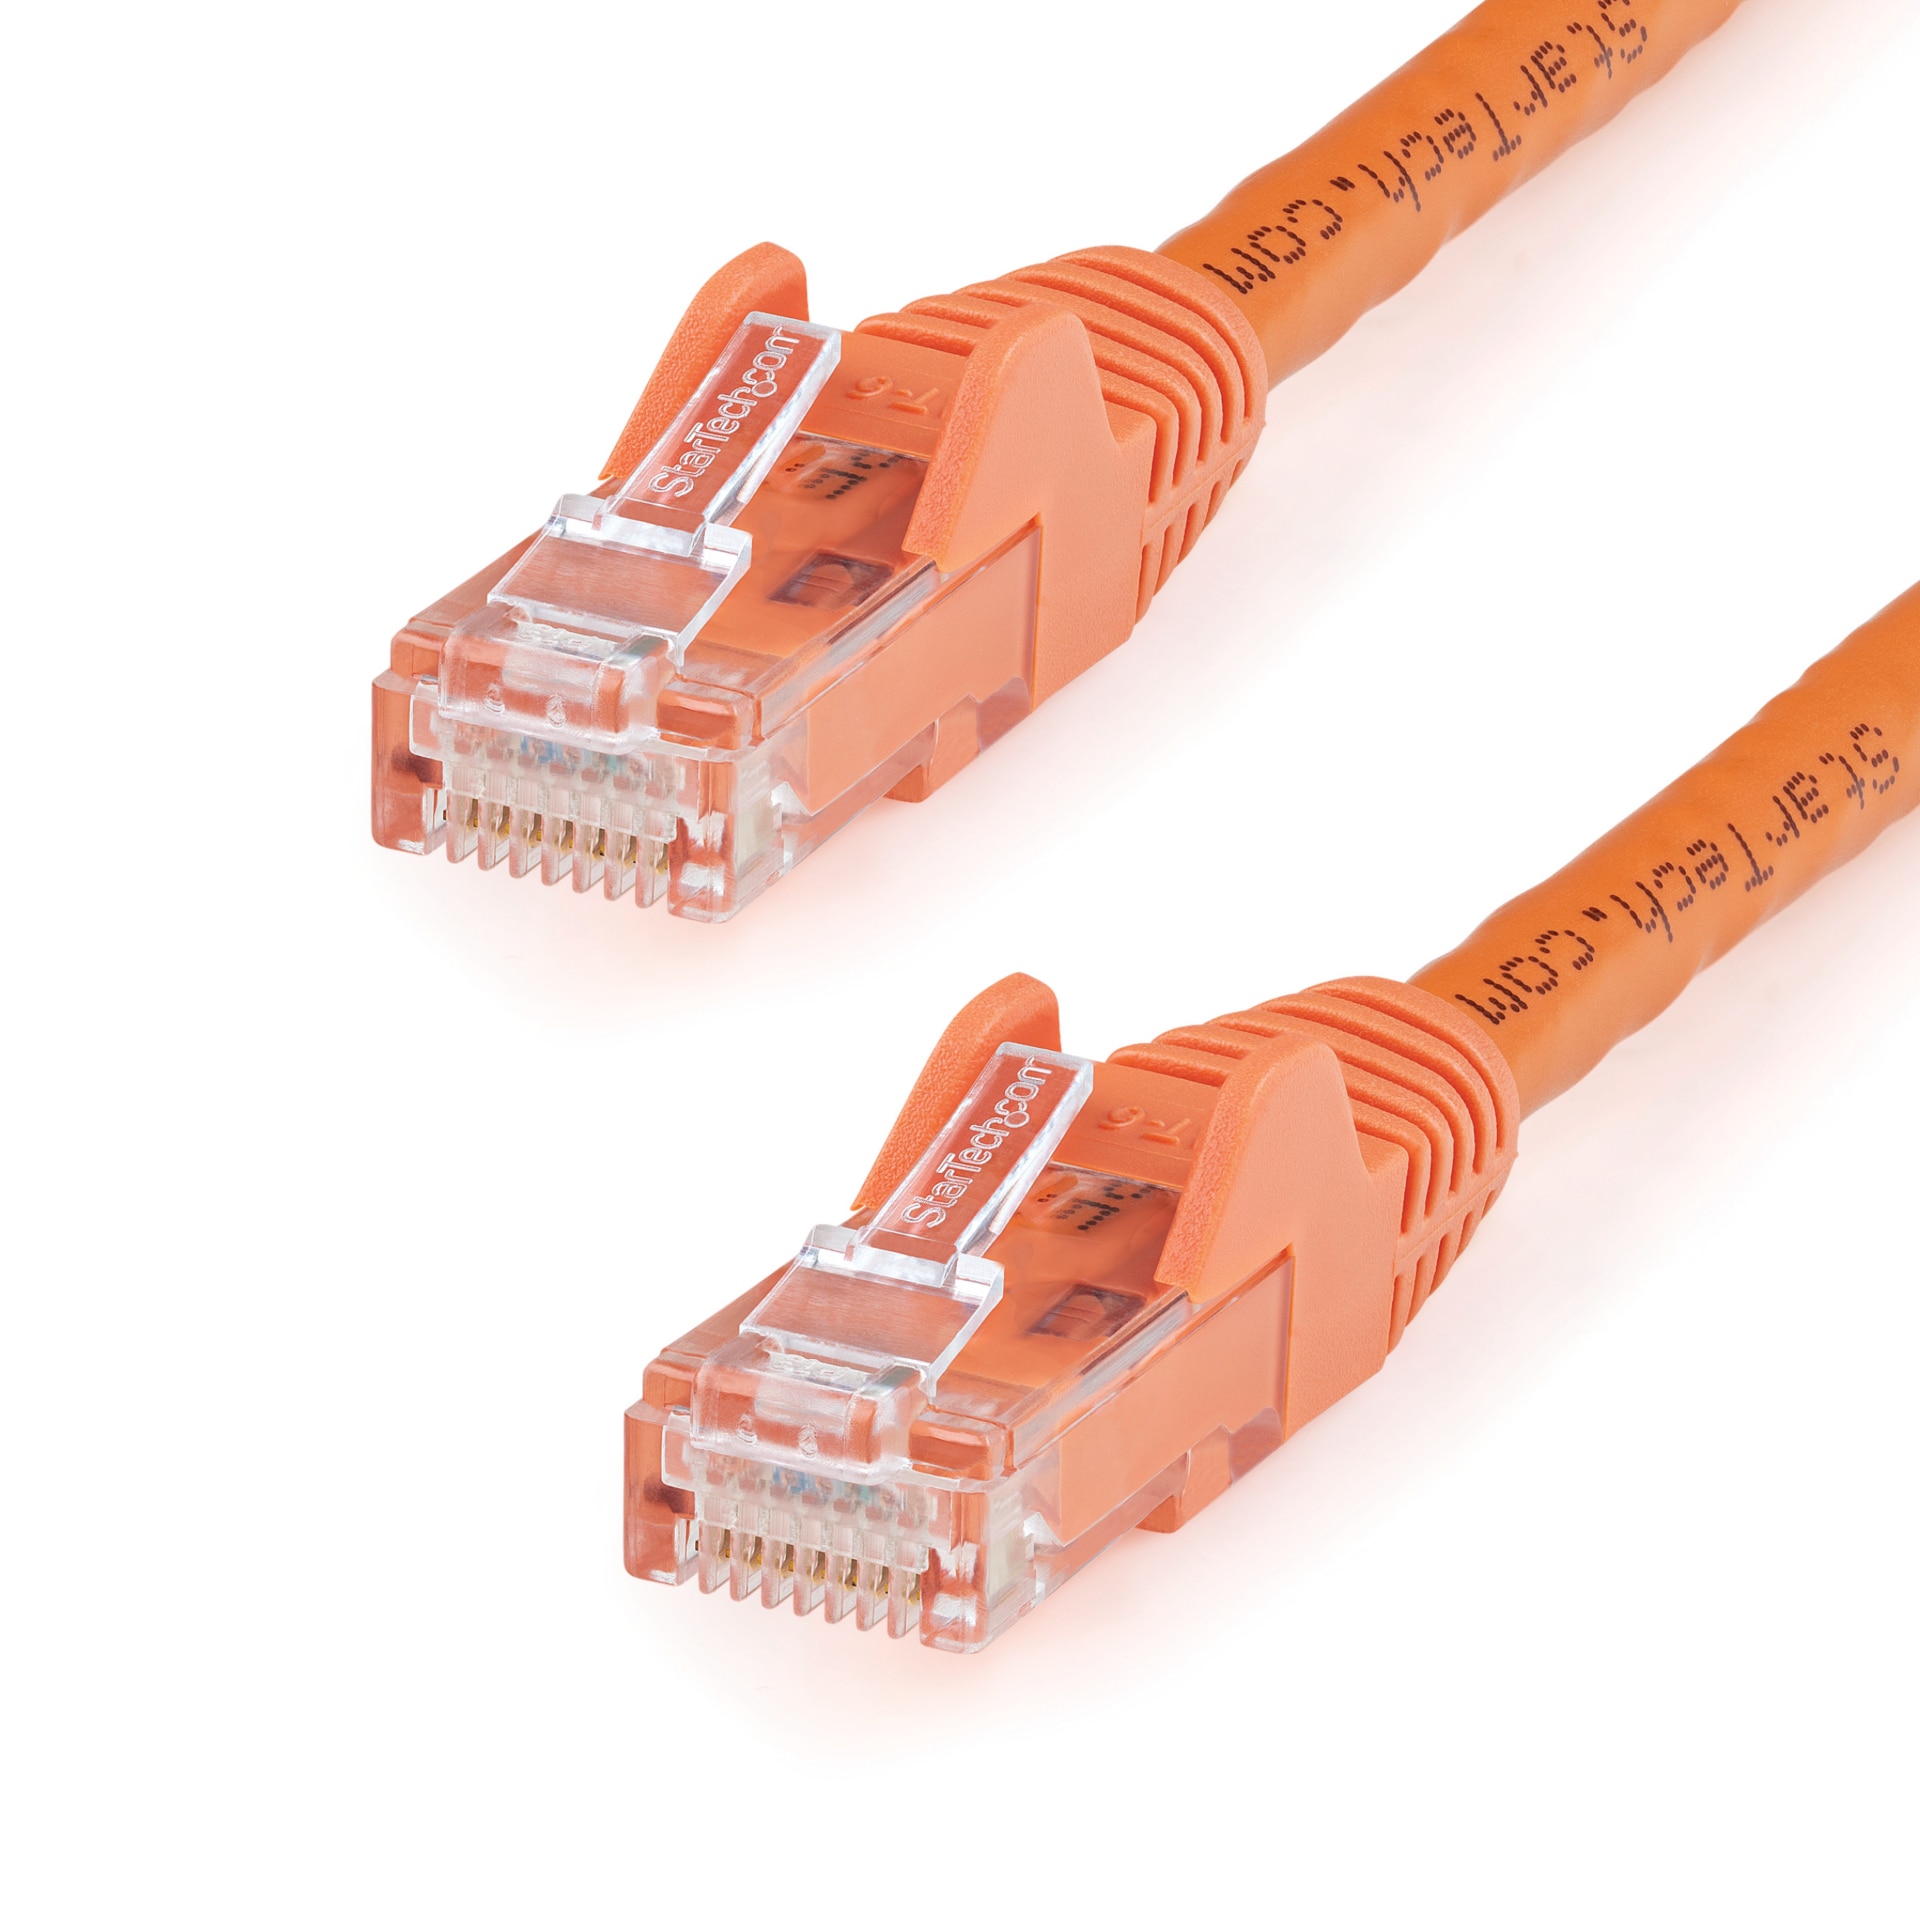 StarTech.com CAT6 Ethernet Cable 1' Orange 650MHz PoE Snagless Patch Cord